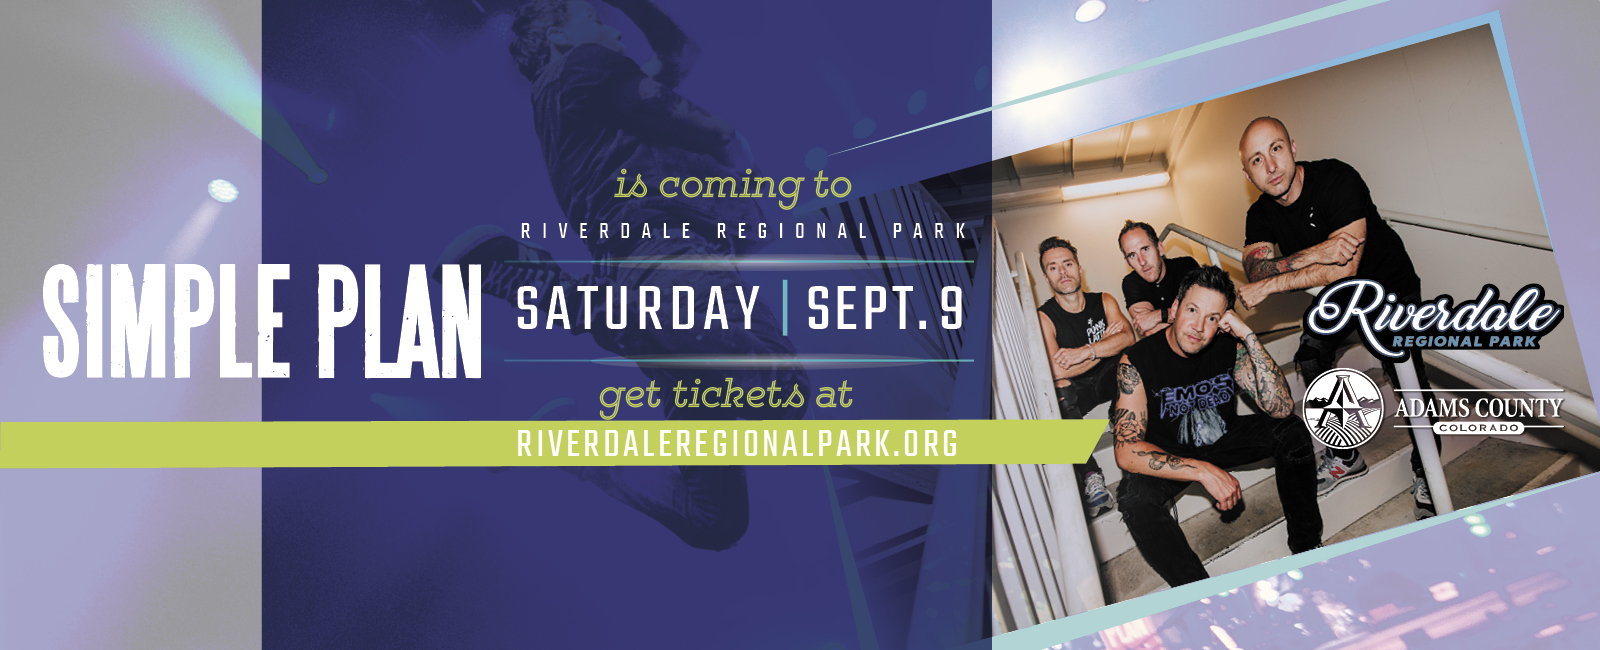 Simple Plan at Riverdale Regional Park - Sept. 9